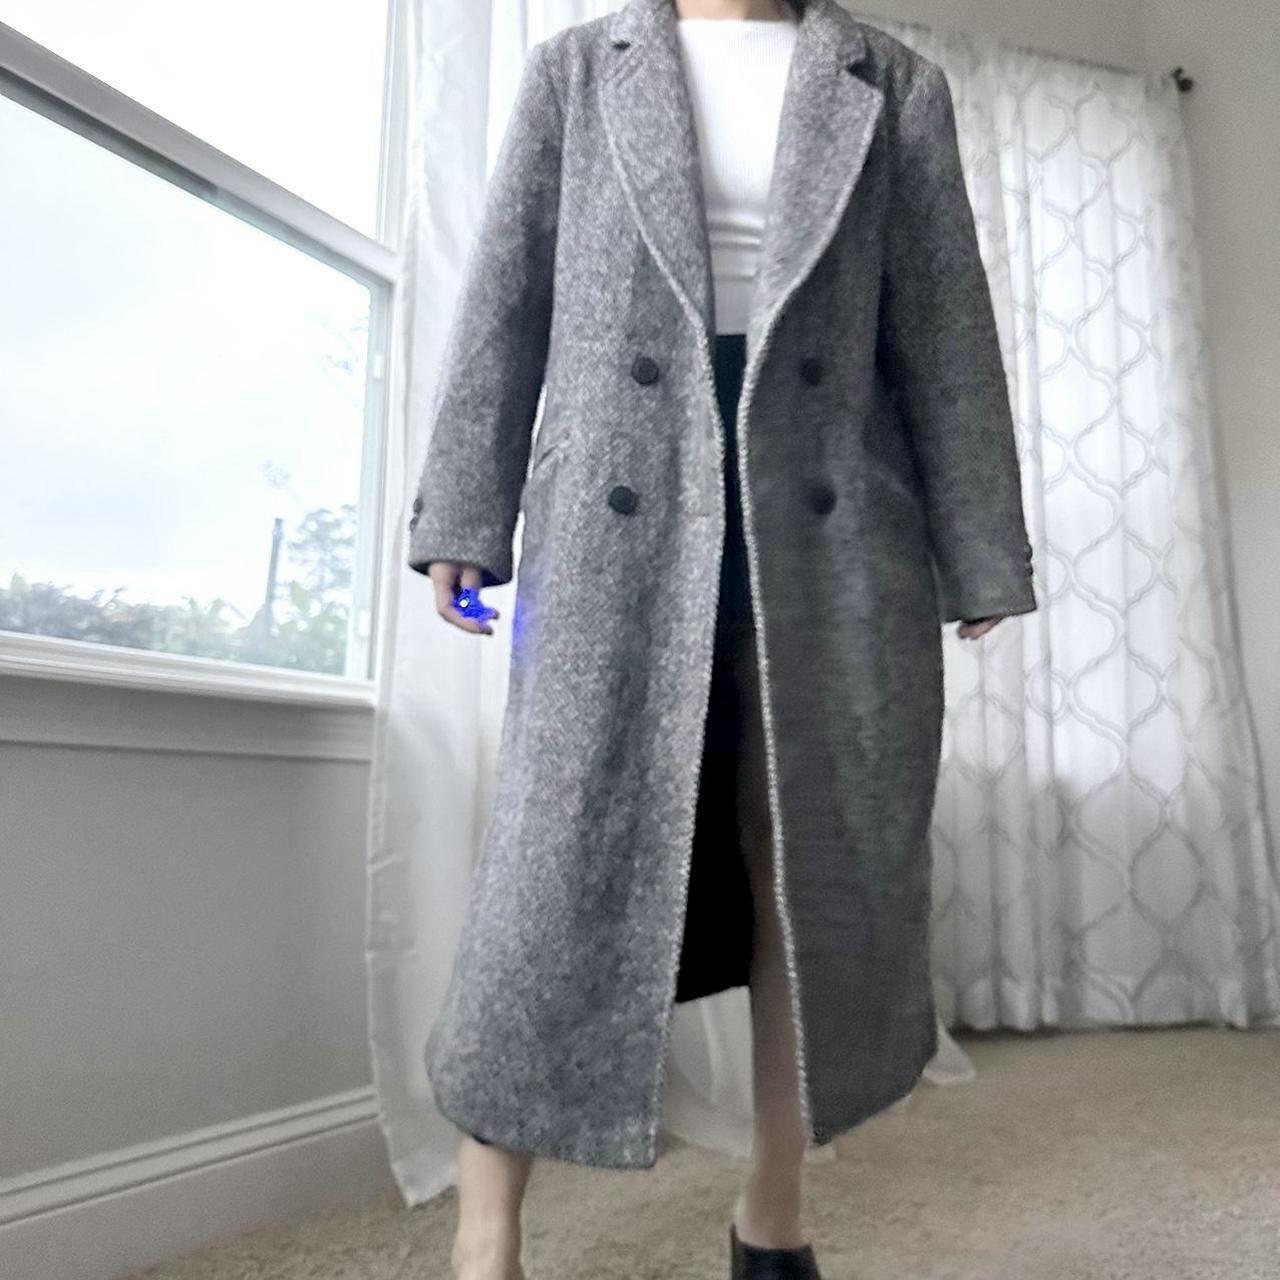 Women's Grey and Black Coat